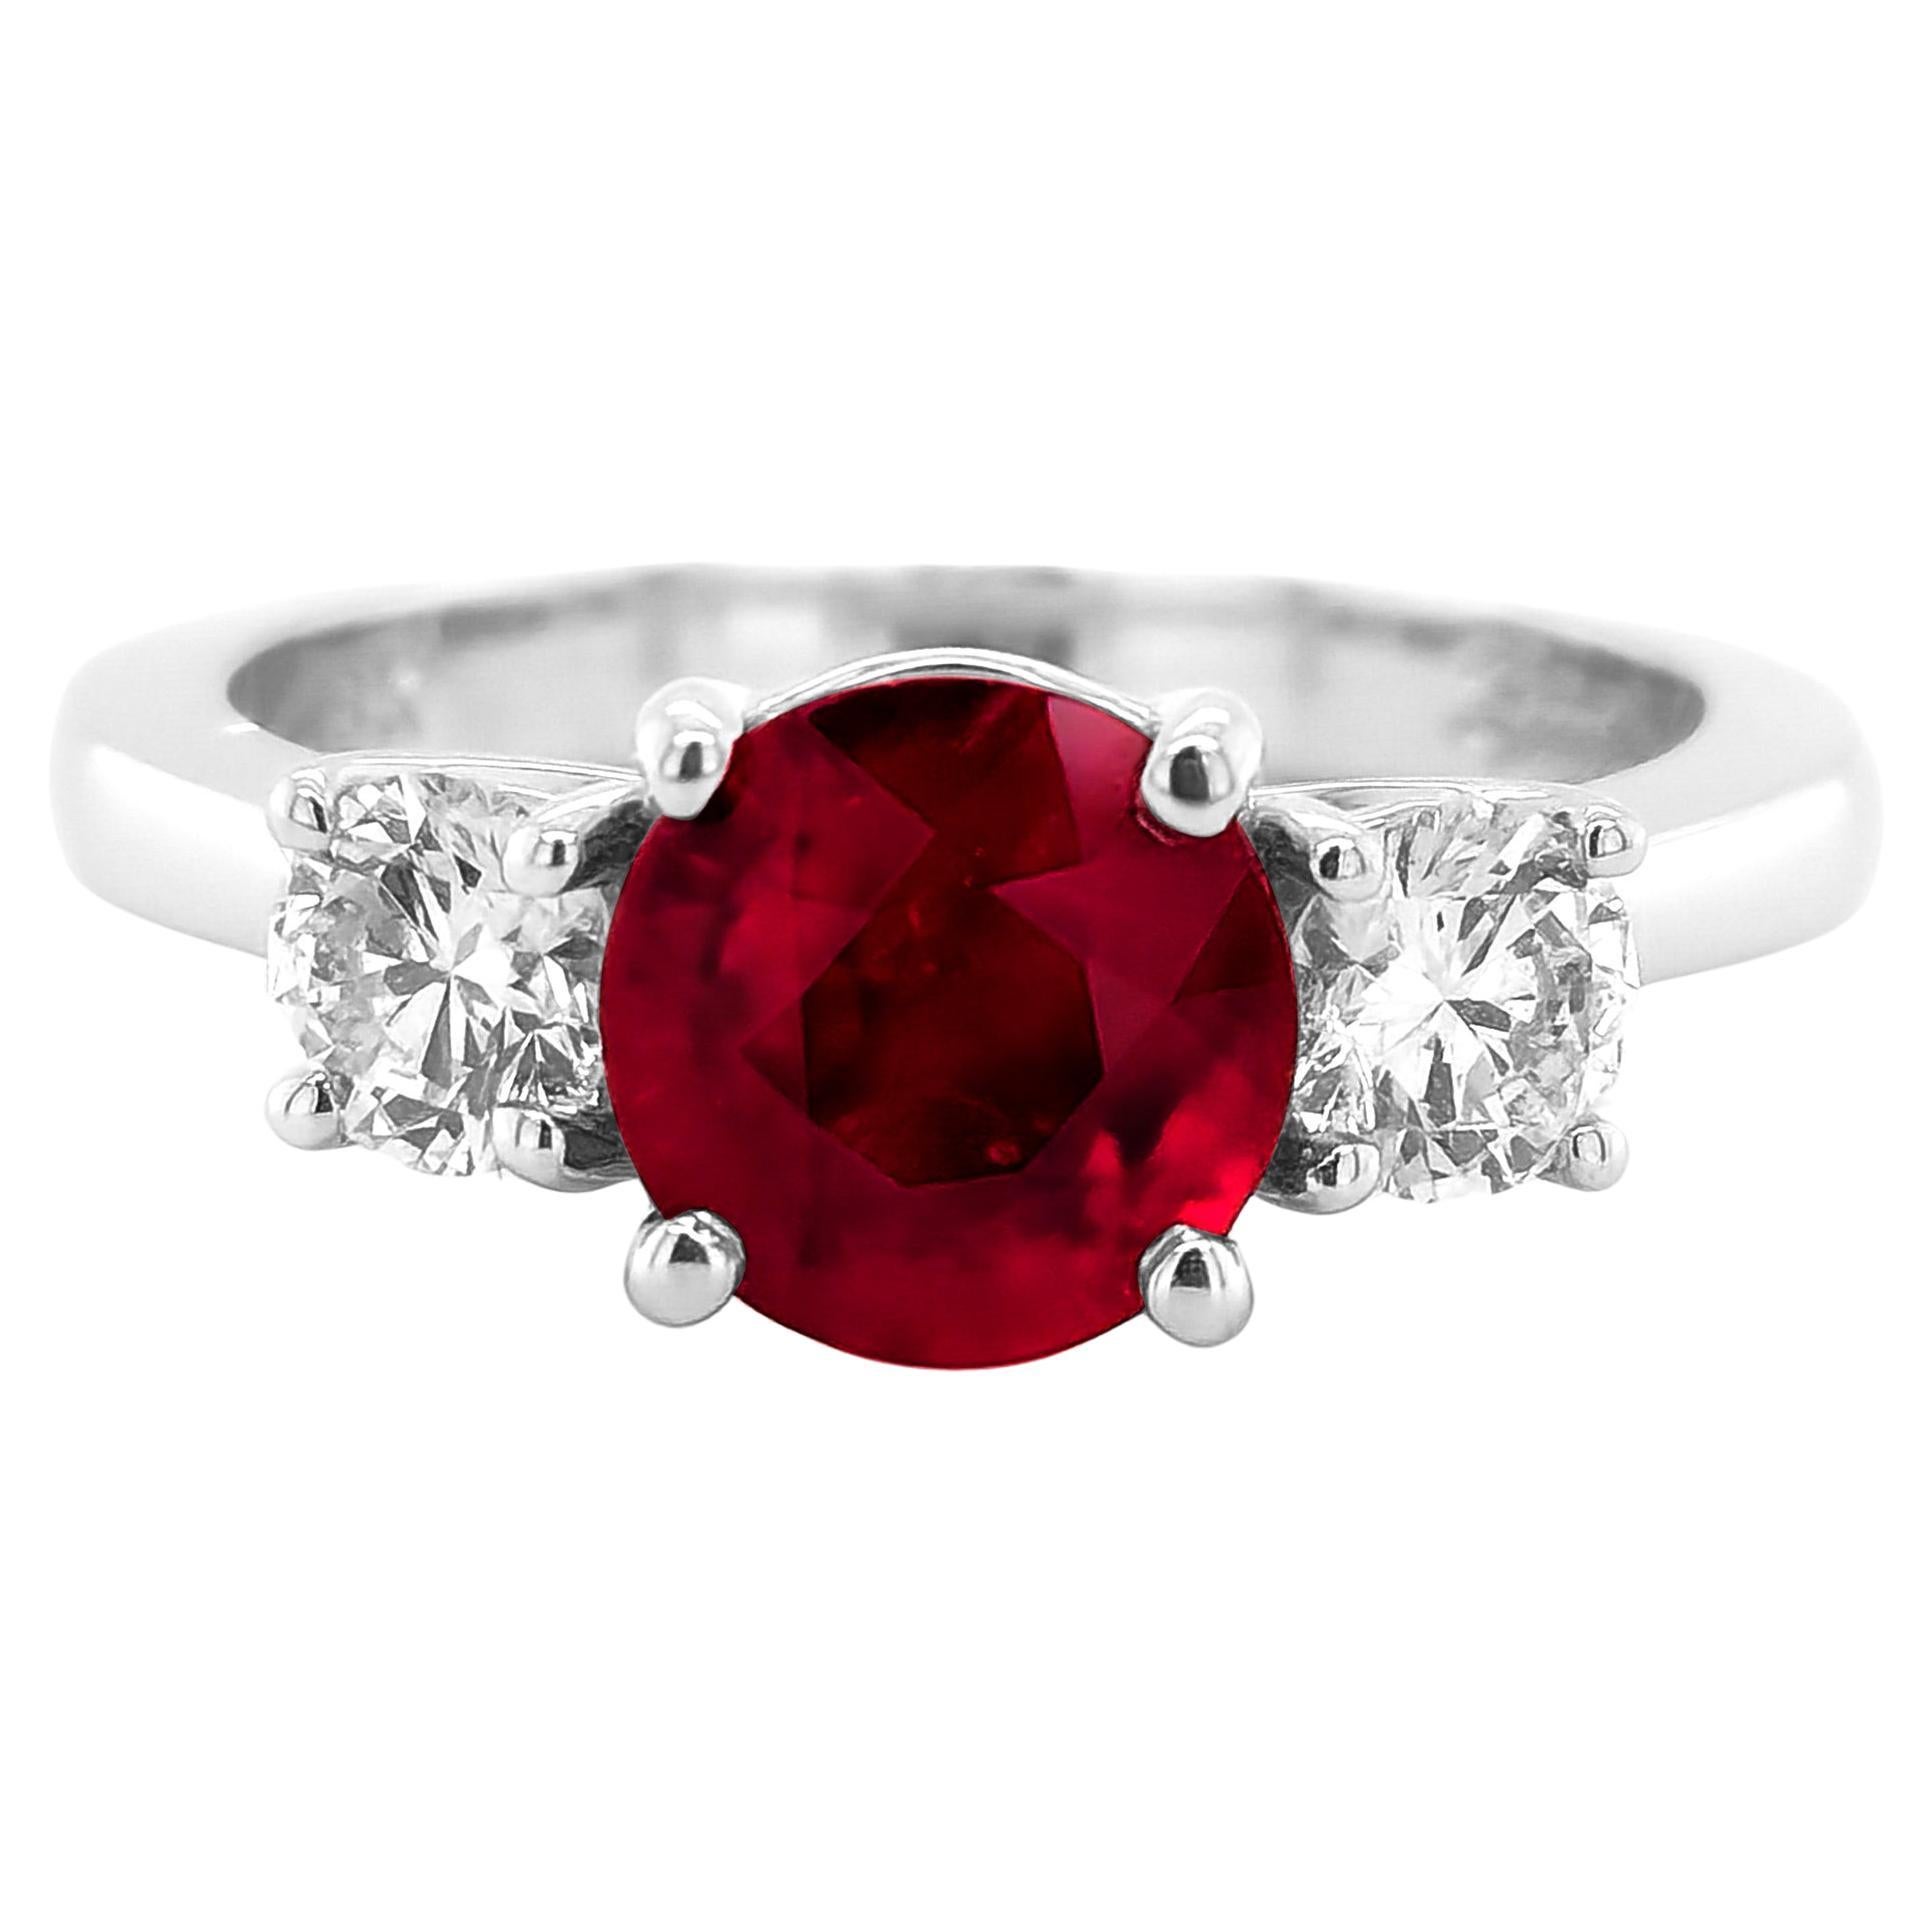 GIA Certified 1.81 Carats Burma Ruby Diamonds set in 18K White Gold Ring